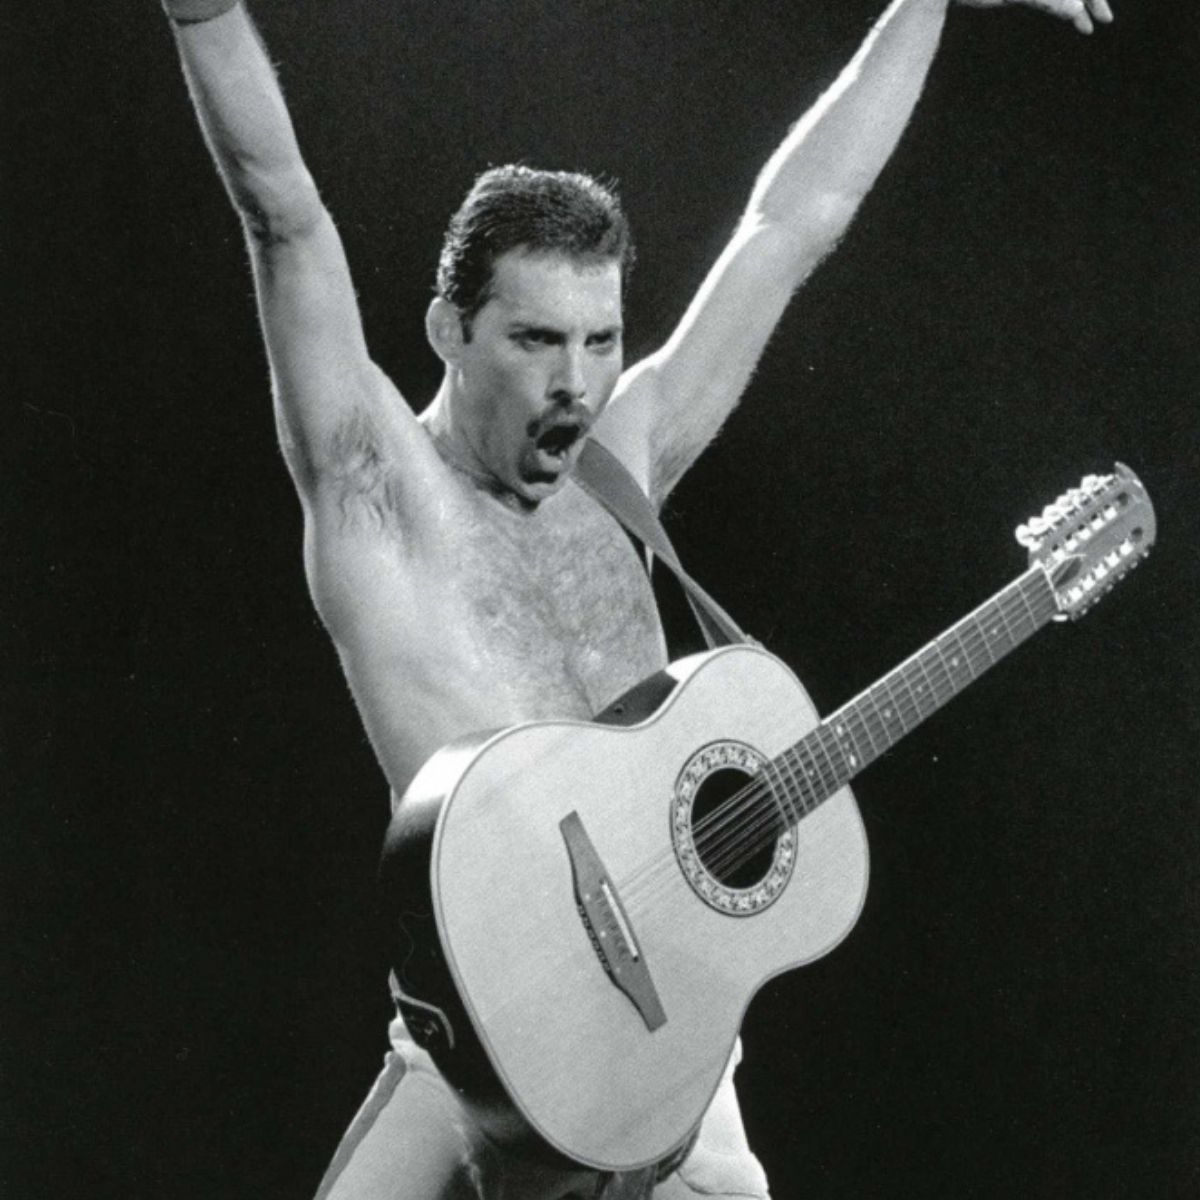 Freddie Mercury at one of his concerts